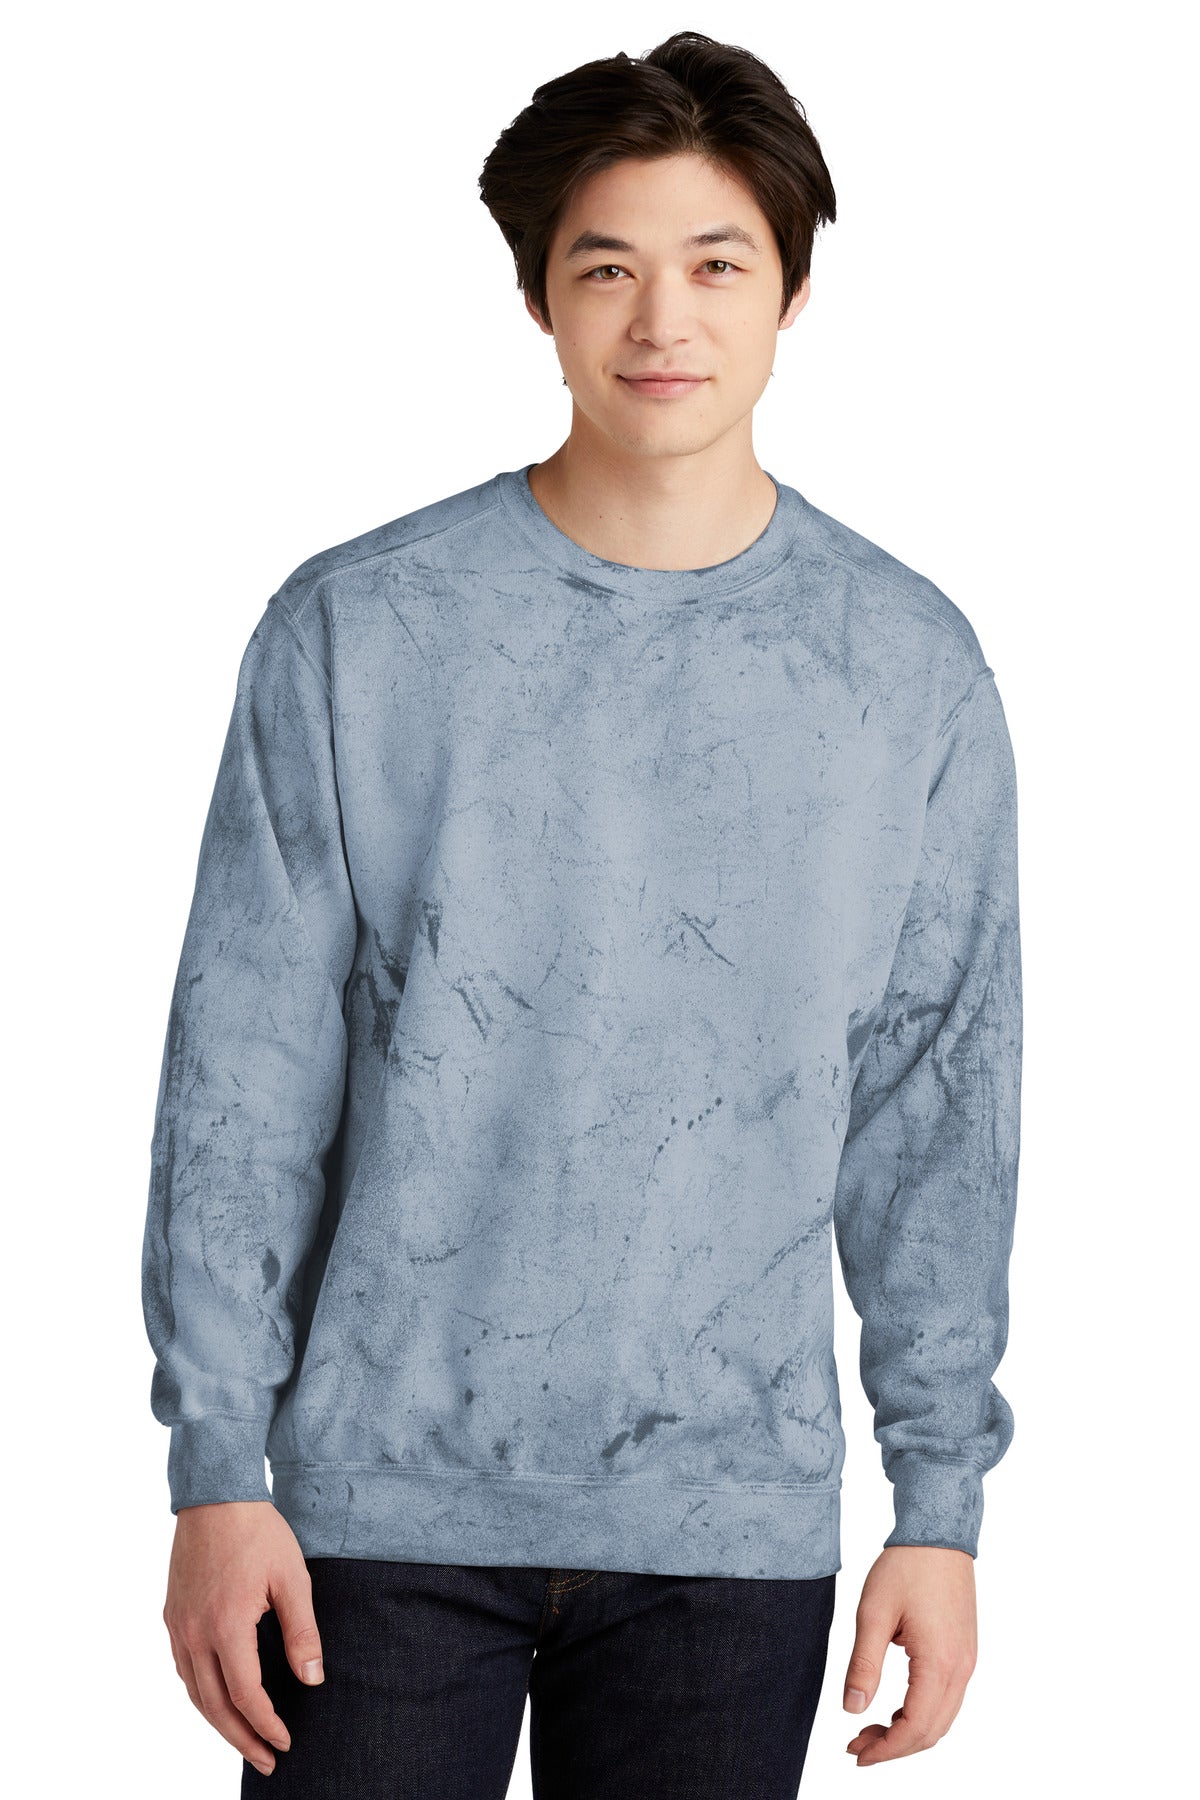 Comfort Colors® Color Blast Crewneck Sweatshirt 1545 - DFW Impression